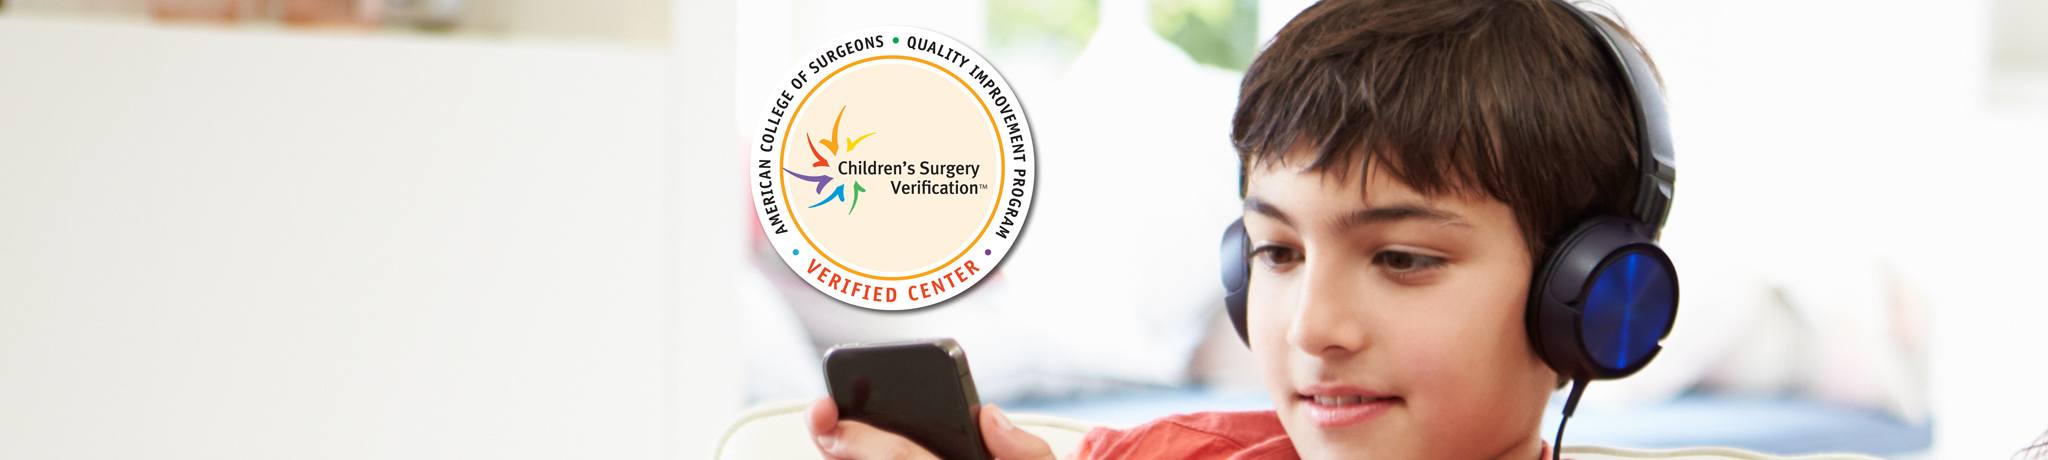 Children's Surgery Verification | American College of Surgeons | Quality Improvement Program | Verified Center